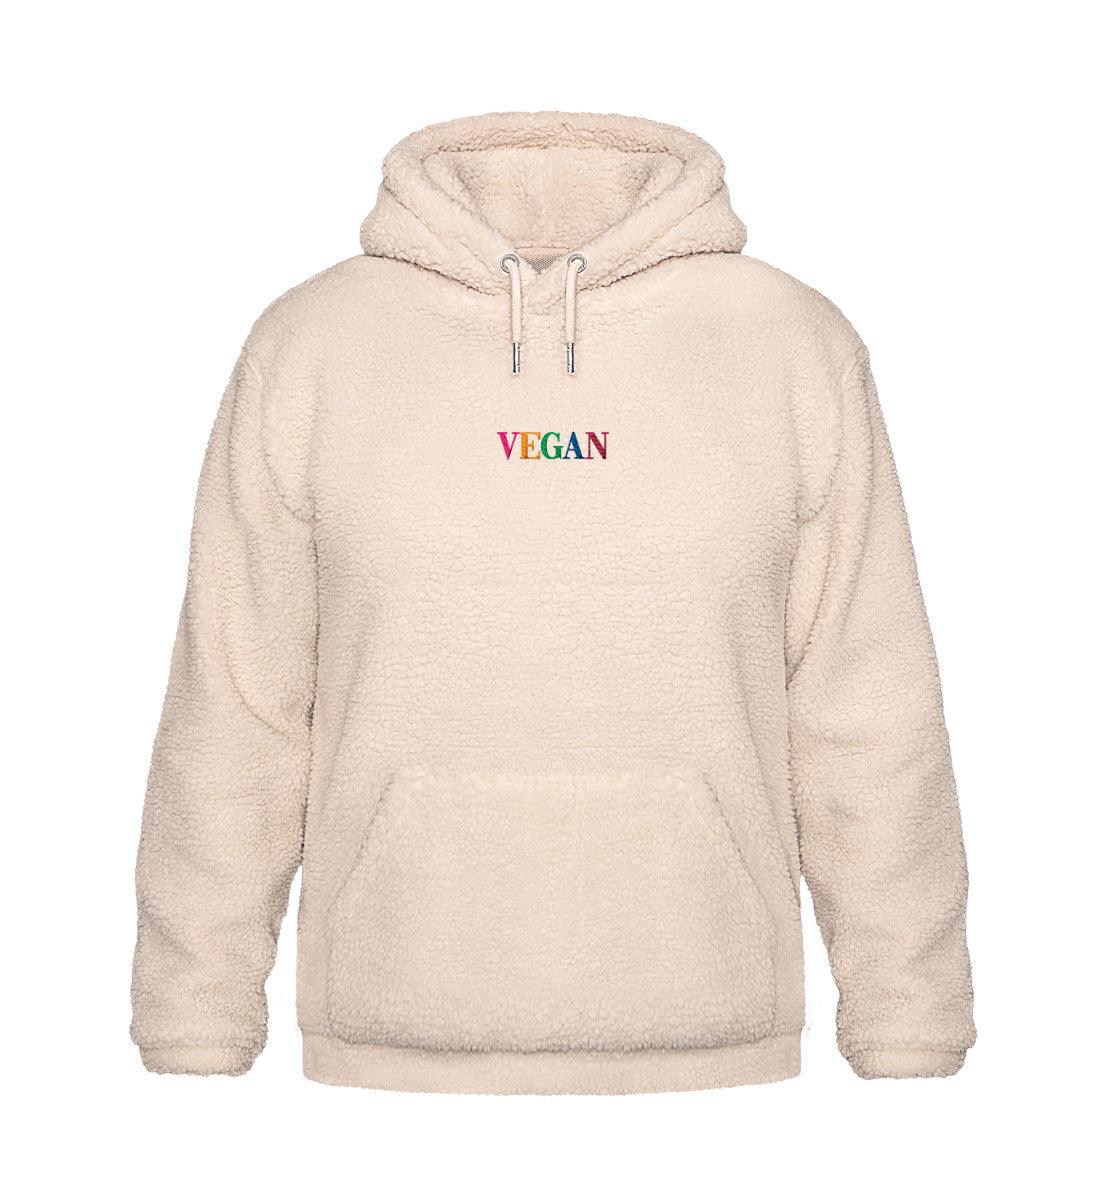 V-E-G-A-N - Sherpa Kuschel Hoodie mit Stick - Team Vegan © vegan t shirt